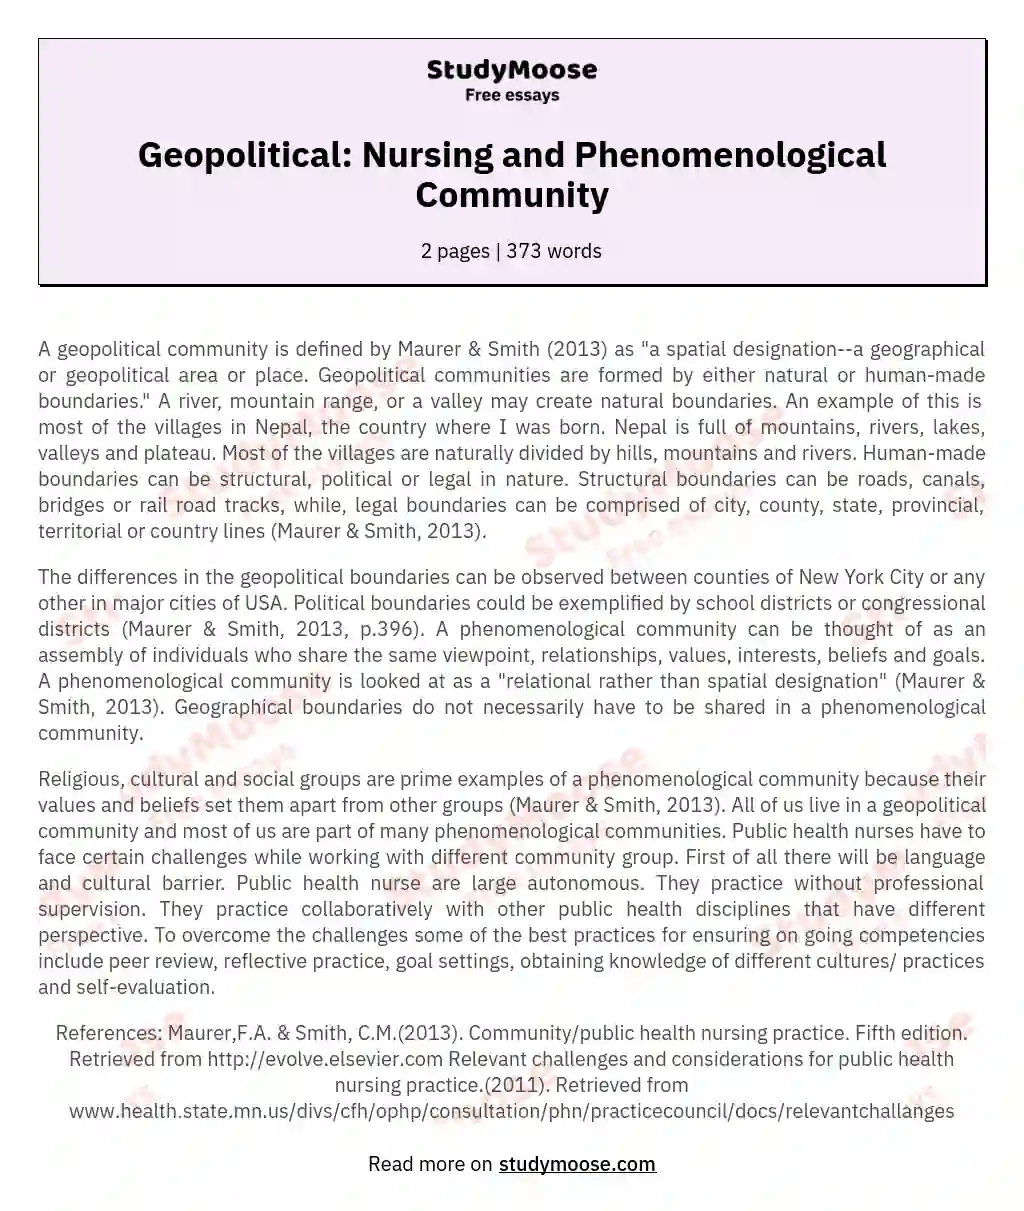 Geopolitical: Nursing and Phenomenological Community essay